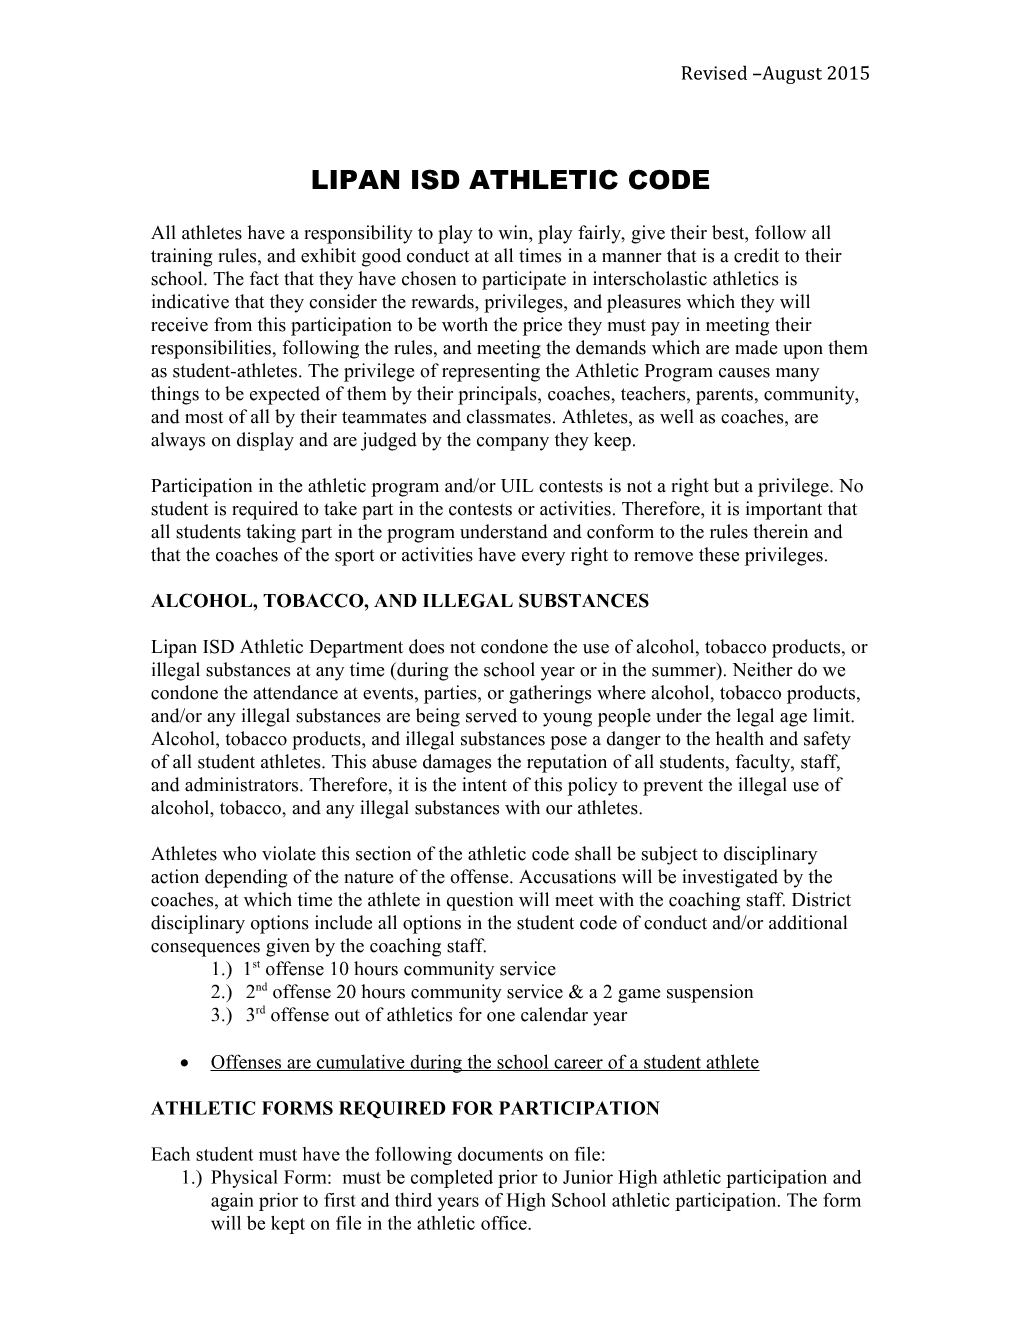 Lipan Isd Athletic Code